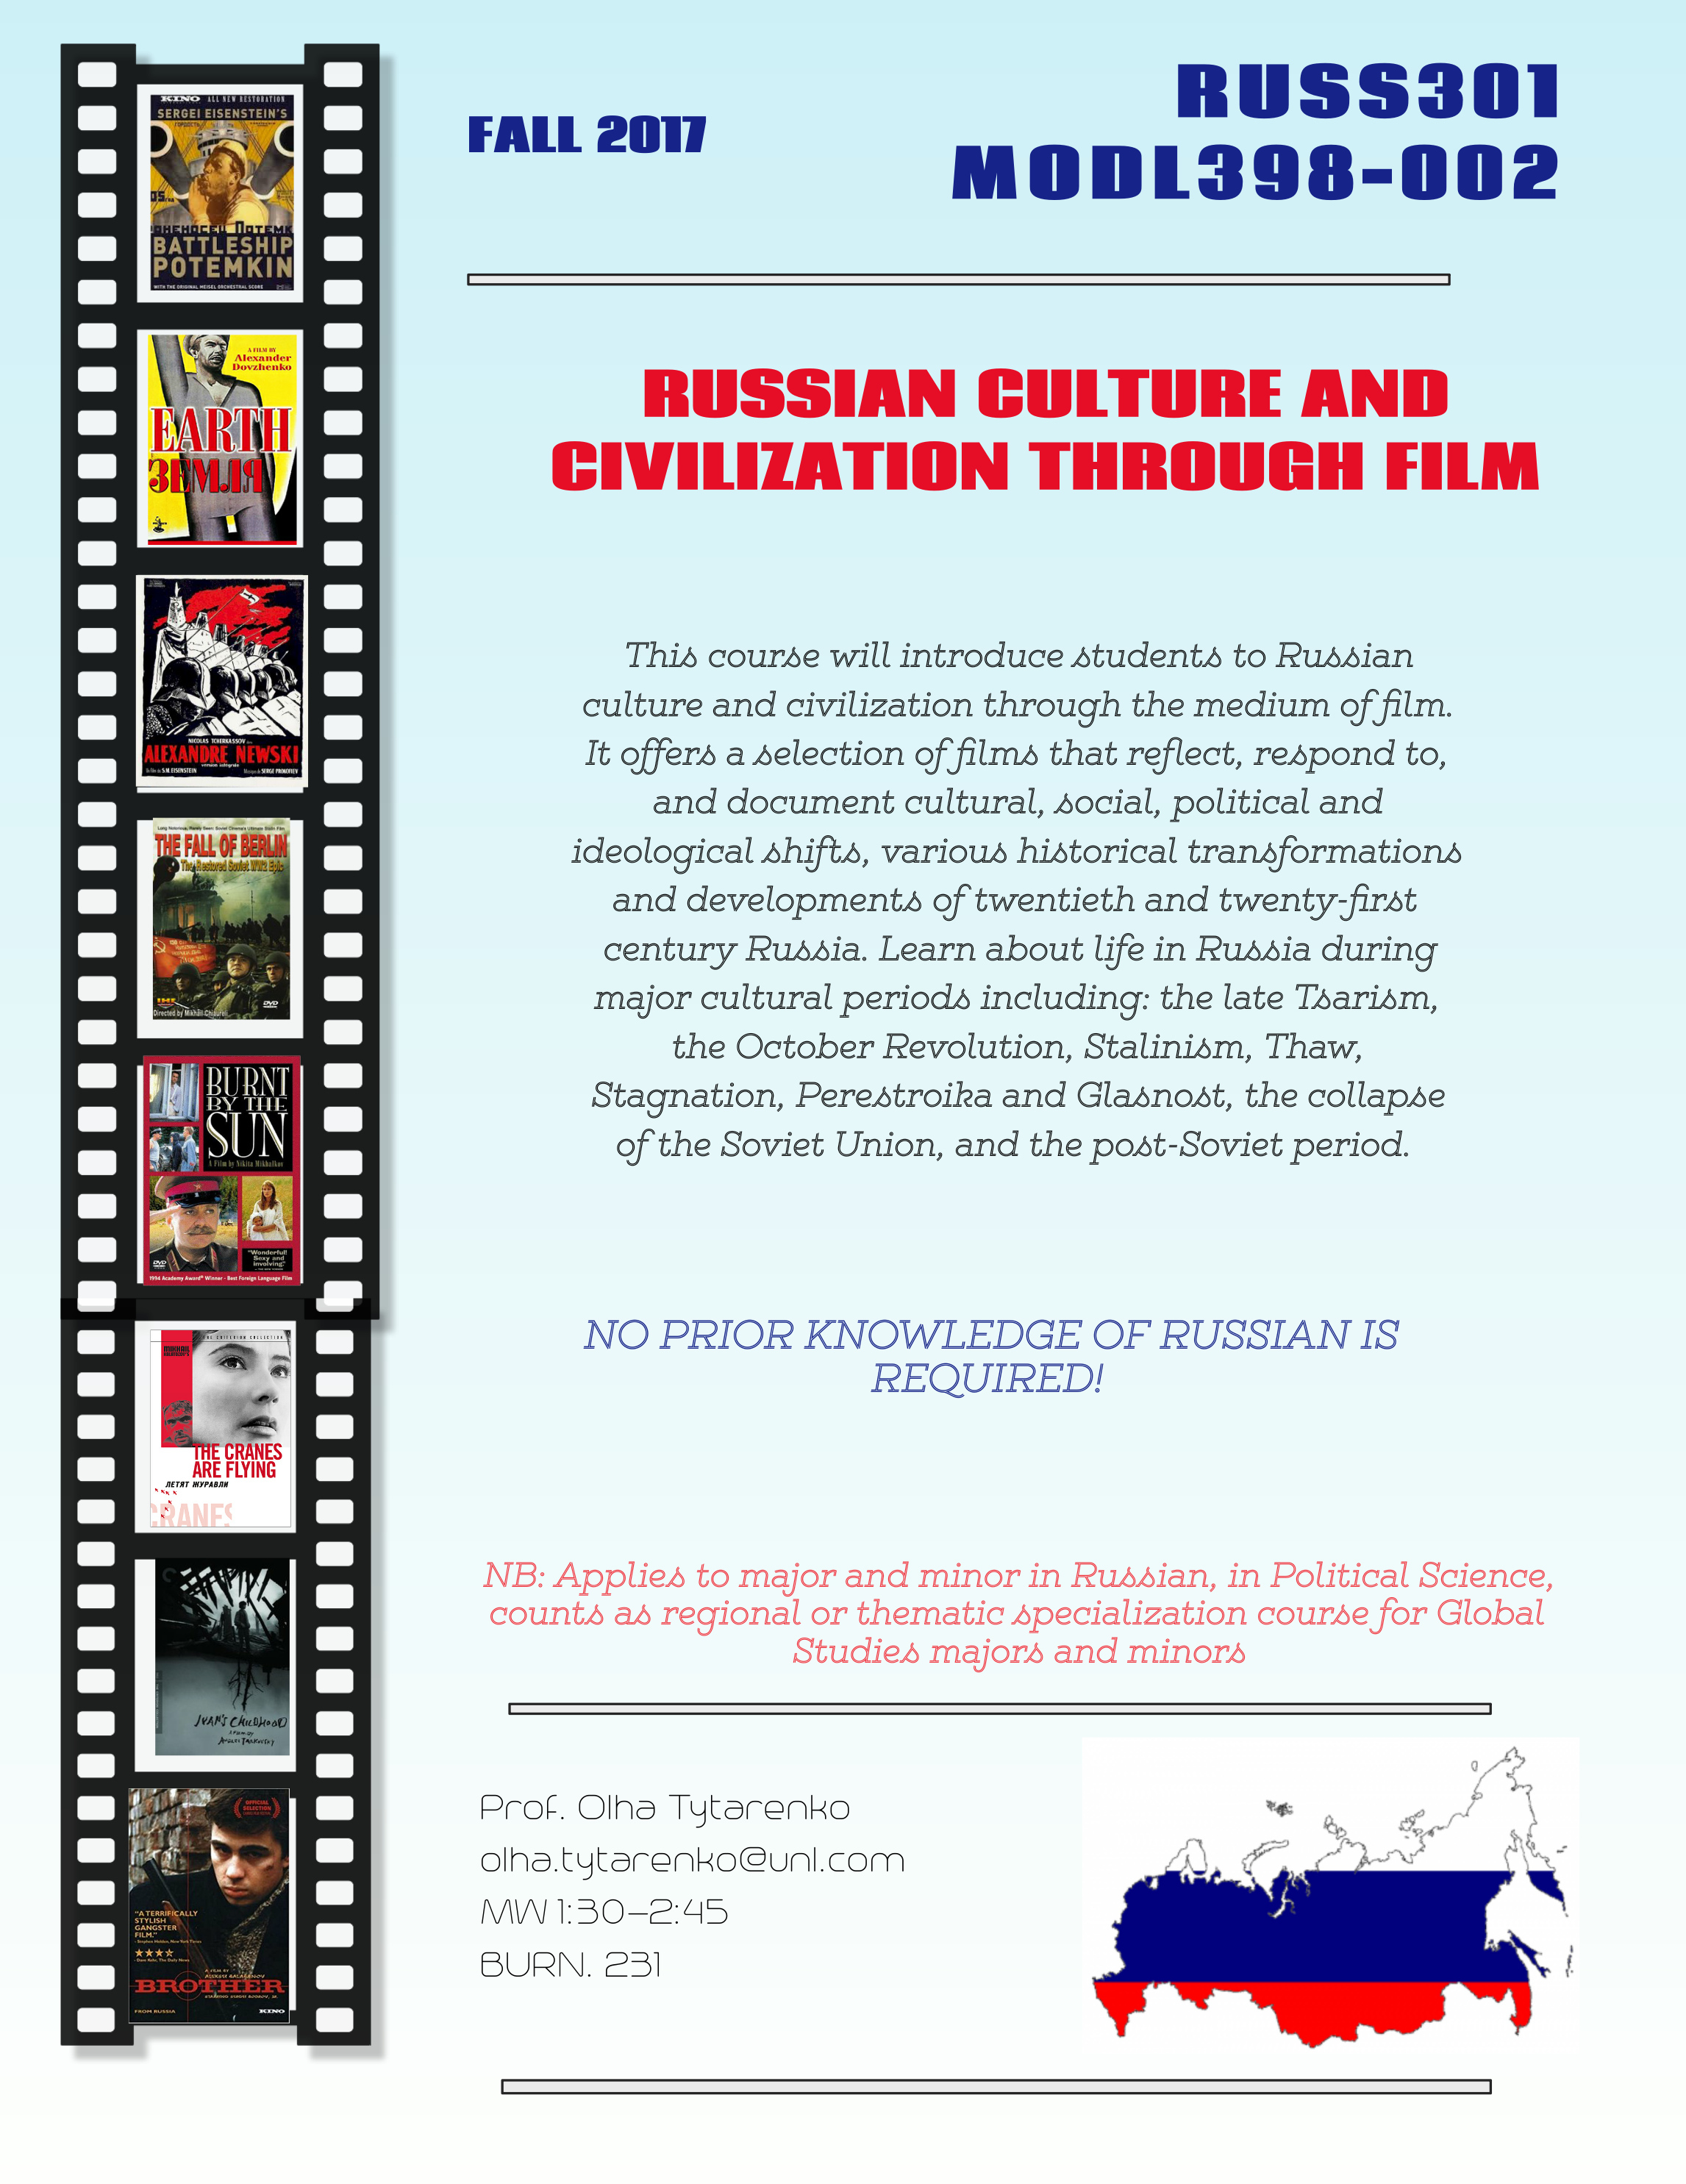 FALL COURSE: MODL398-002: Russian Culture and Civilization Through Film